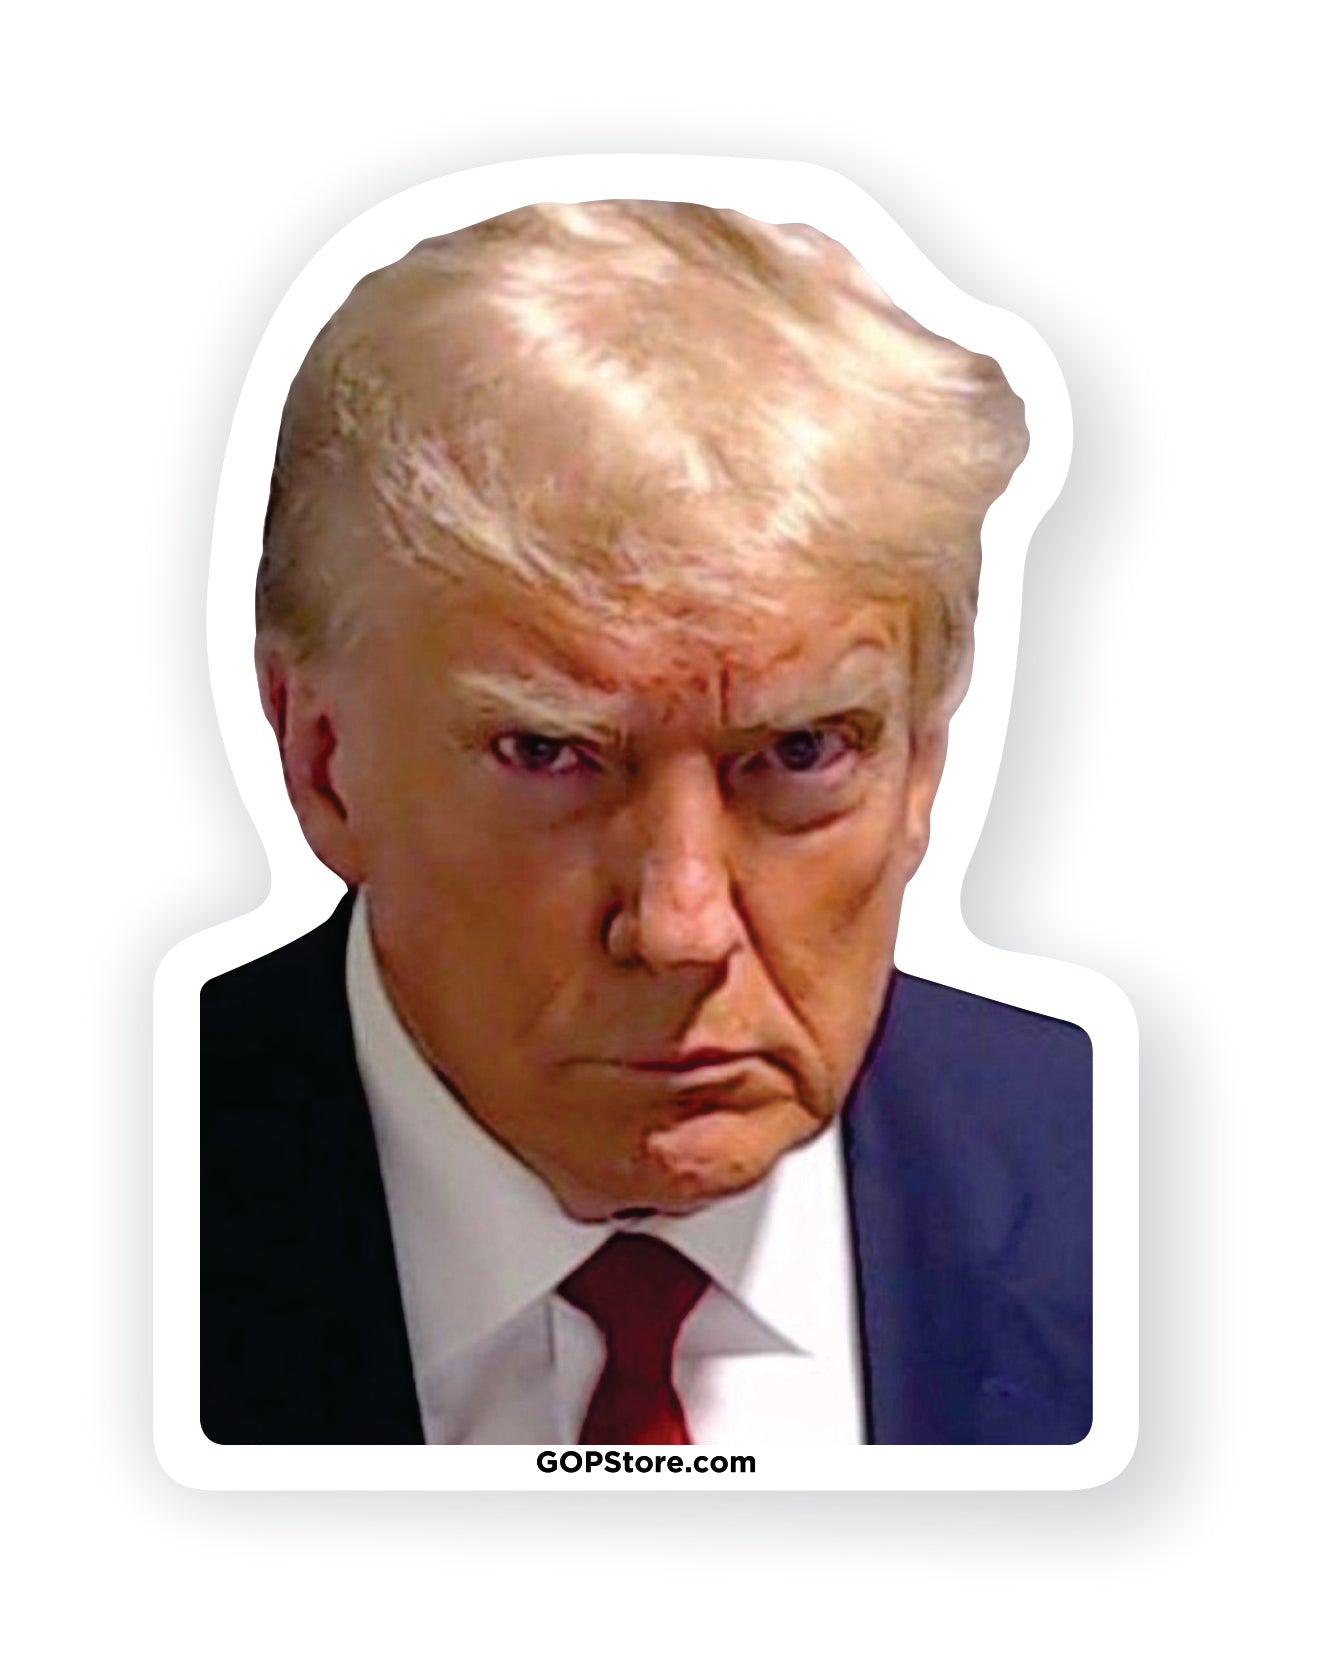 Trump Mug Shot Photo Sticker